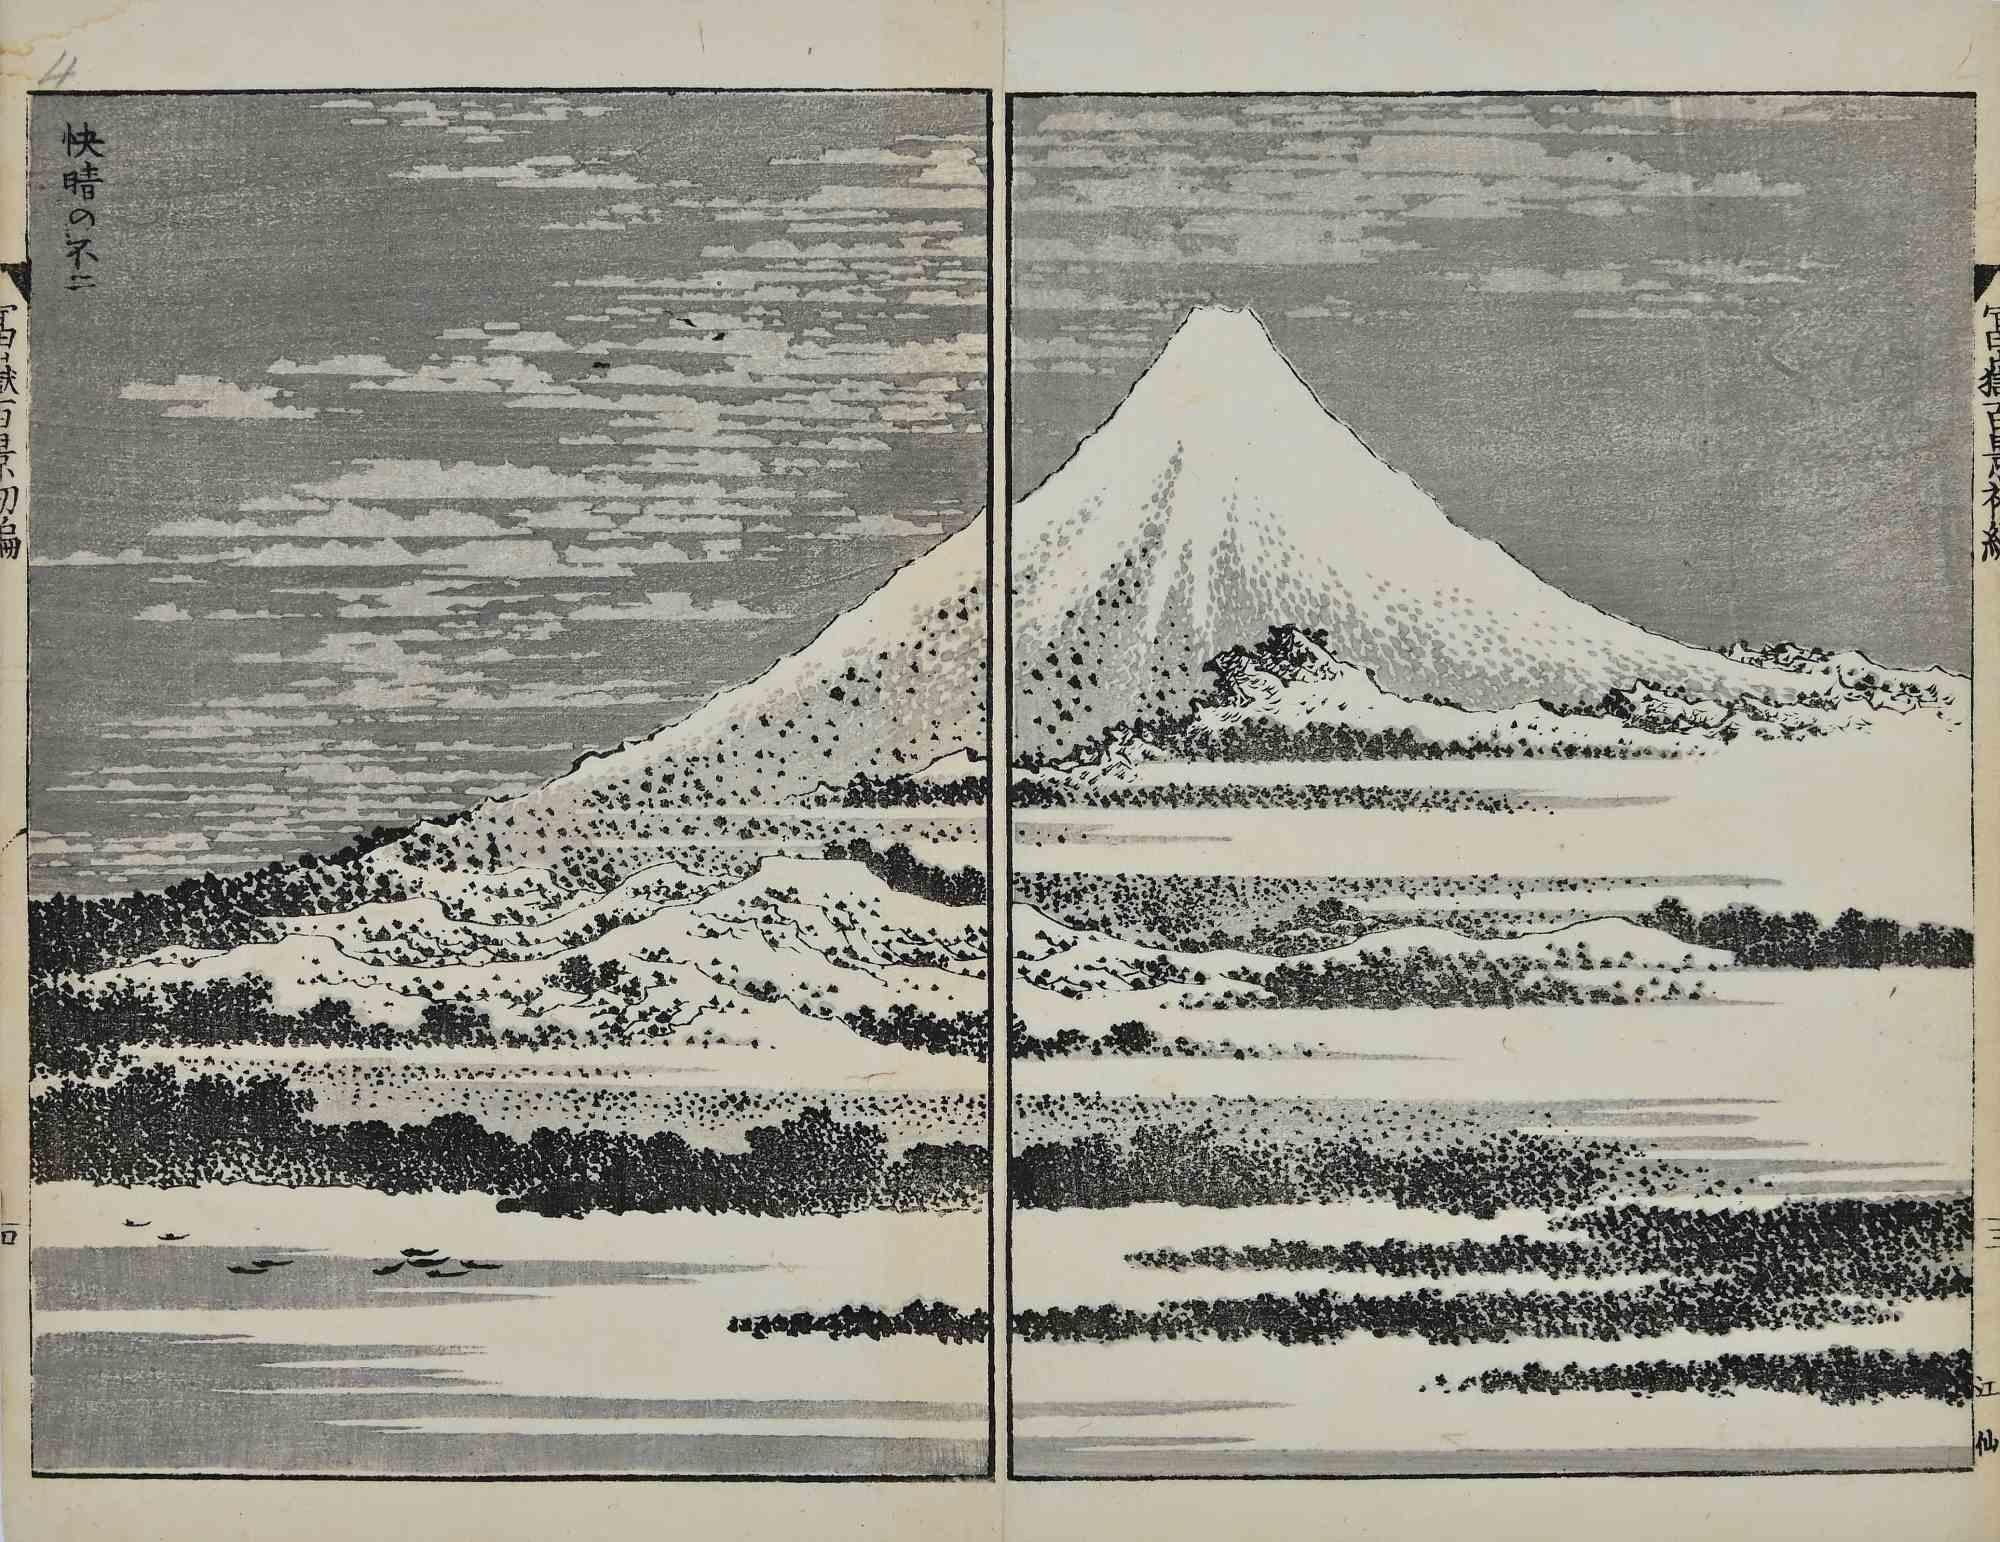 Mount Fuji - Original Woodcut Print by Katsushika Hokusai - Early 19th Cent.